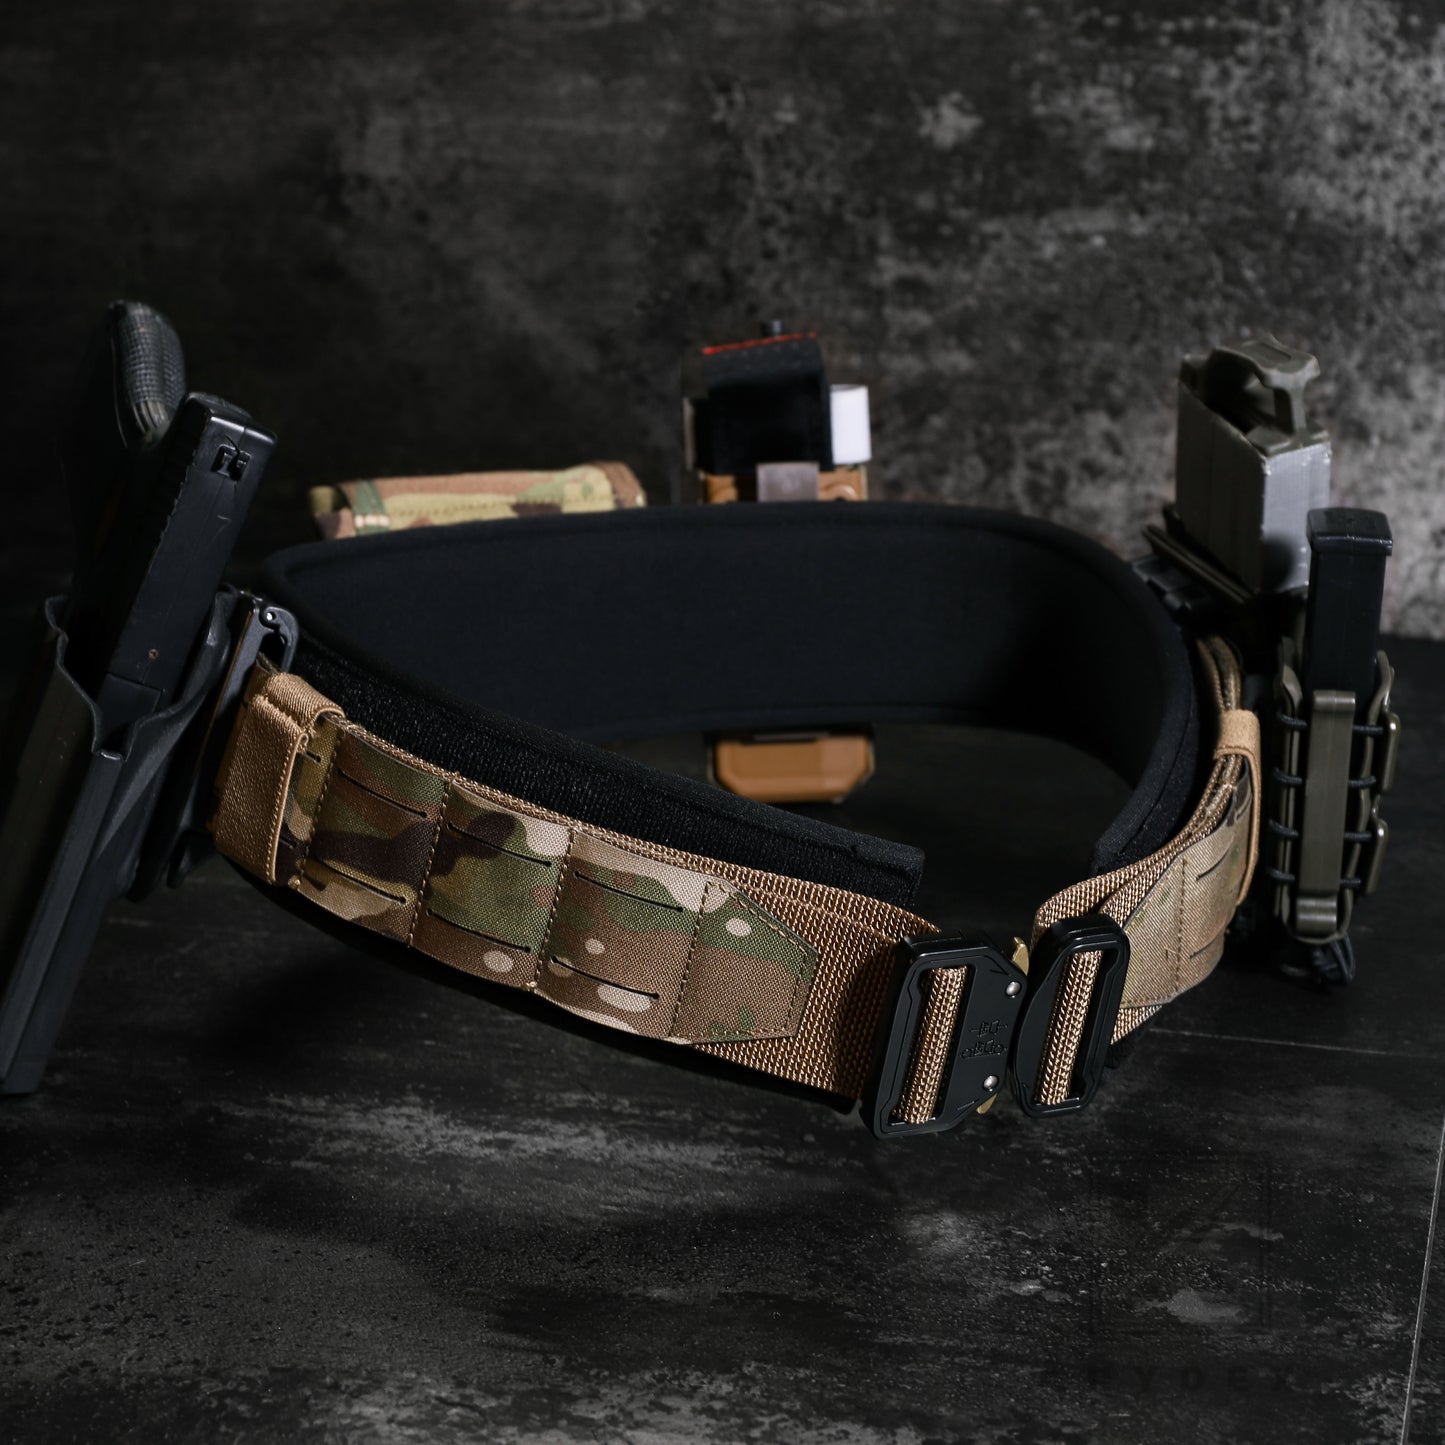 Krydex Tactical Molle Belt Quick Release Duty Gun Shooting Belt Laser Molle Padded Load Bearing Stiffened Belt